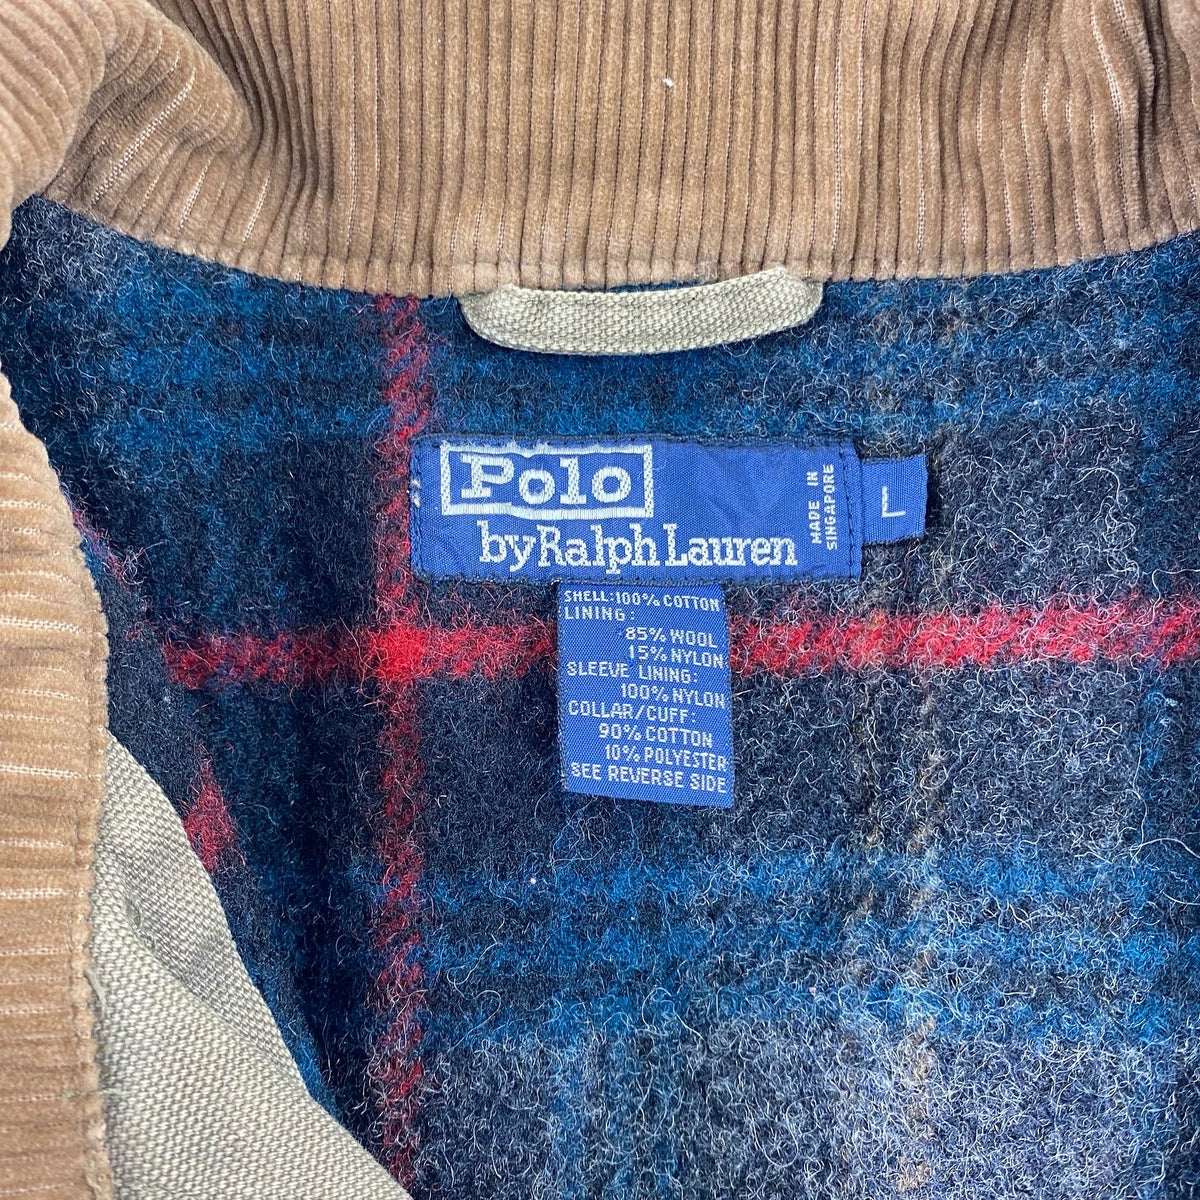 Polo ralph lauren wool lined hunting jacket large – Vintage Sponsor